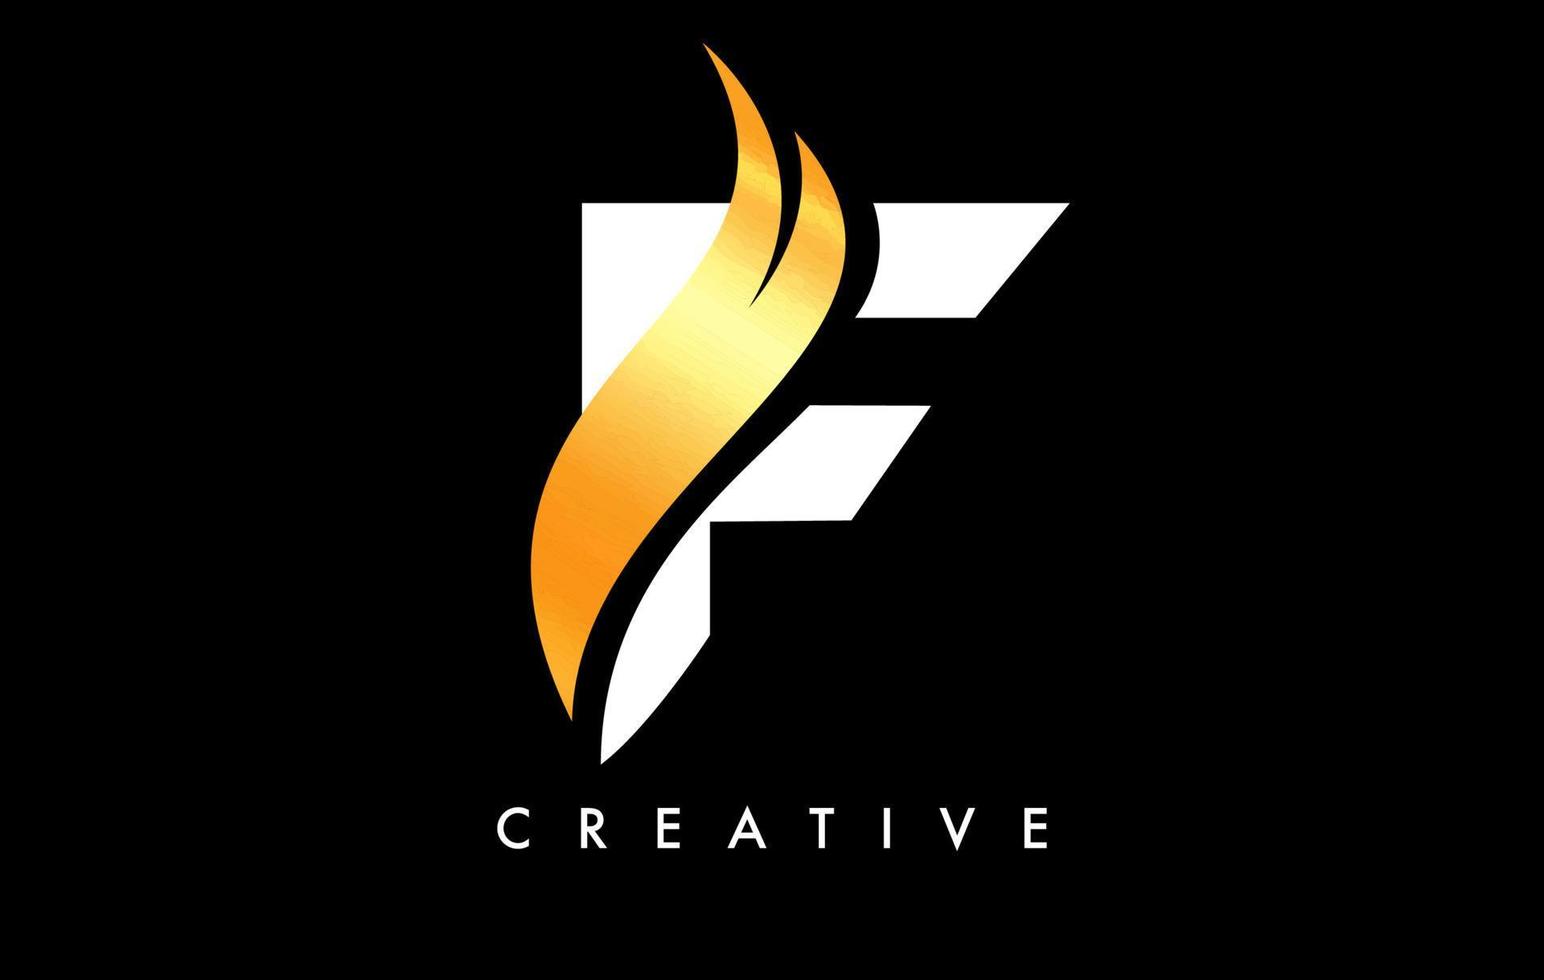 buchstabe f logo icon design mit goldenem swoosh und kreativem kurvenschnittformvektor vektor